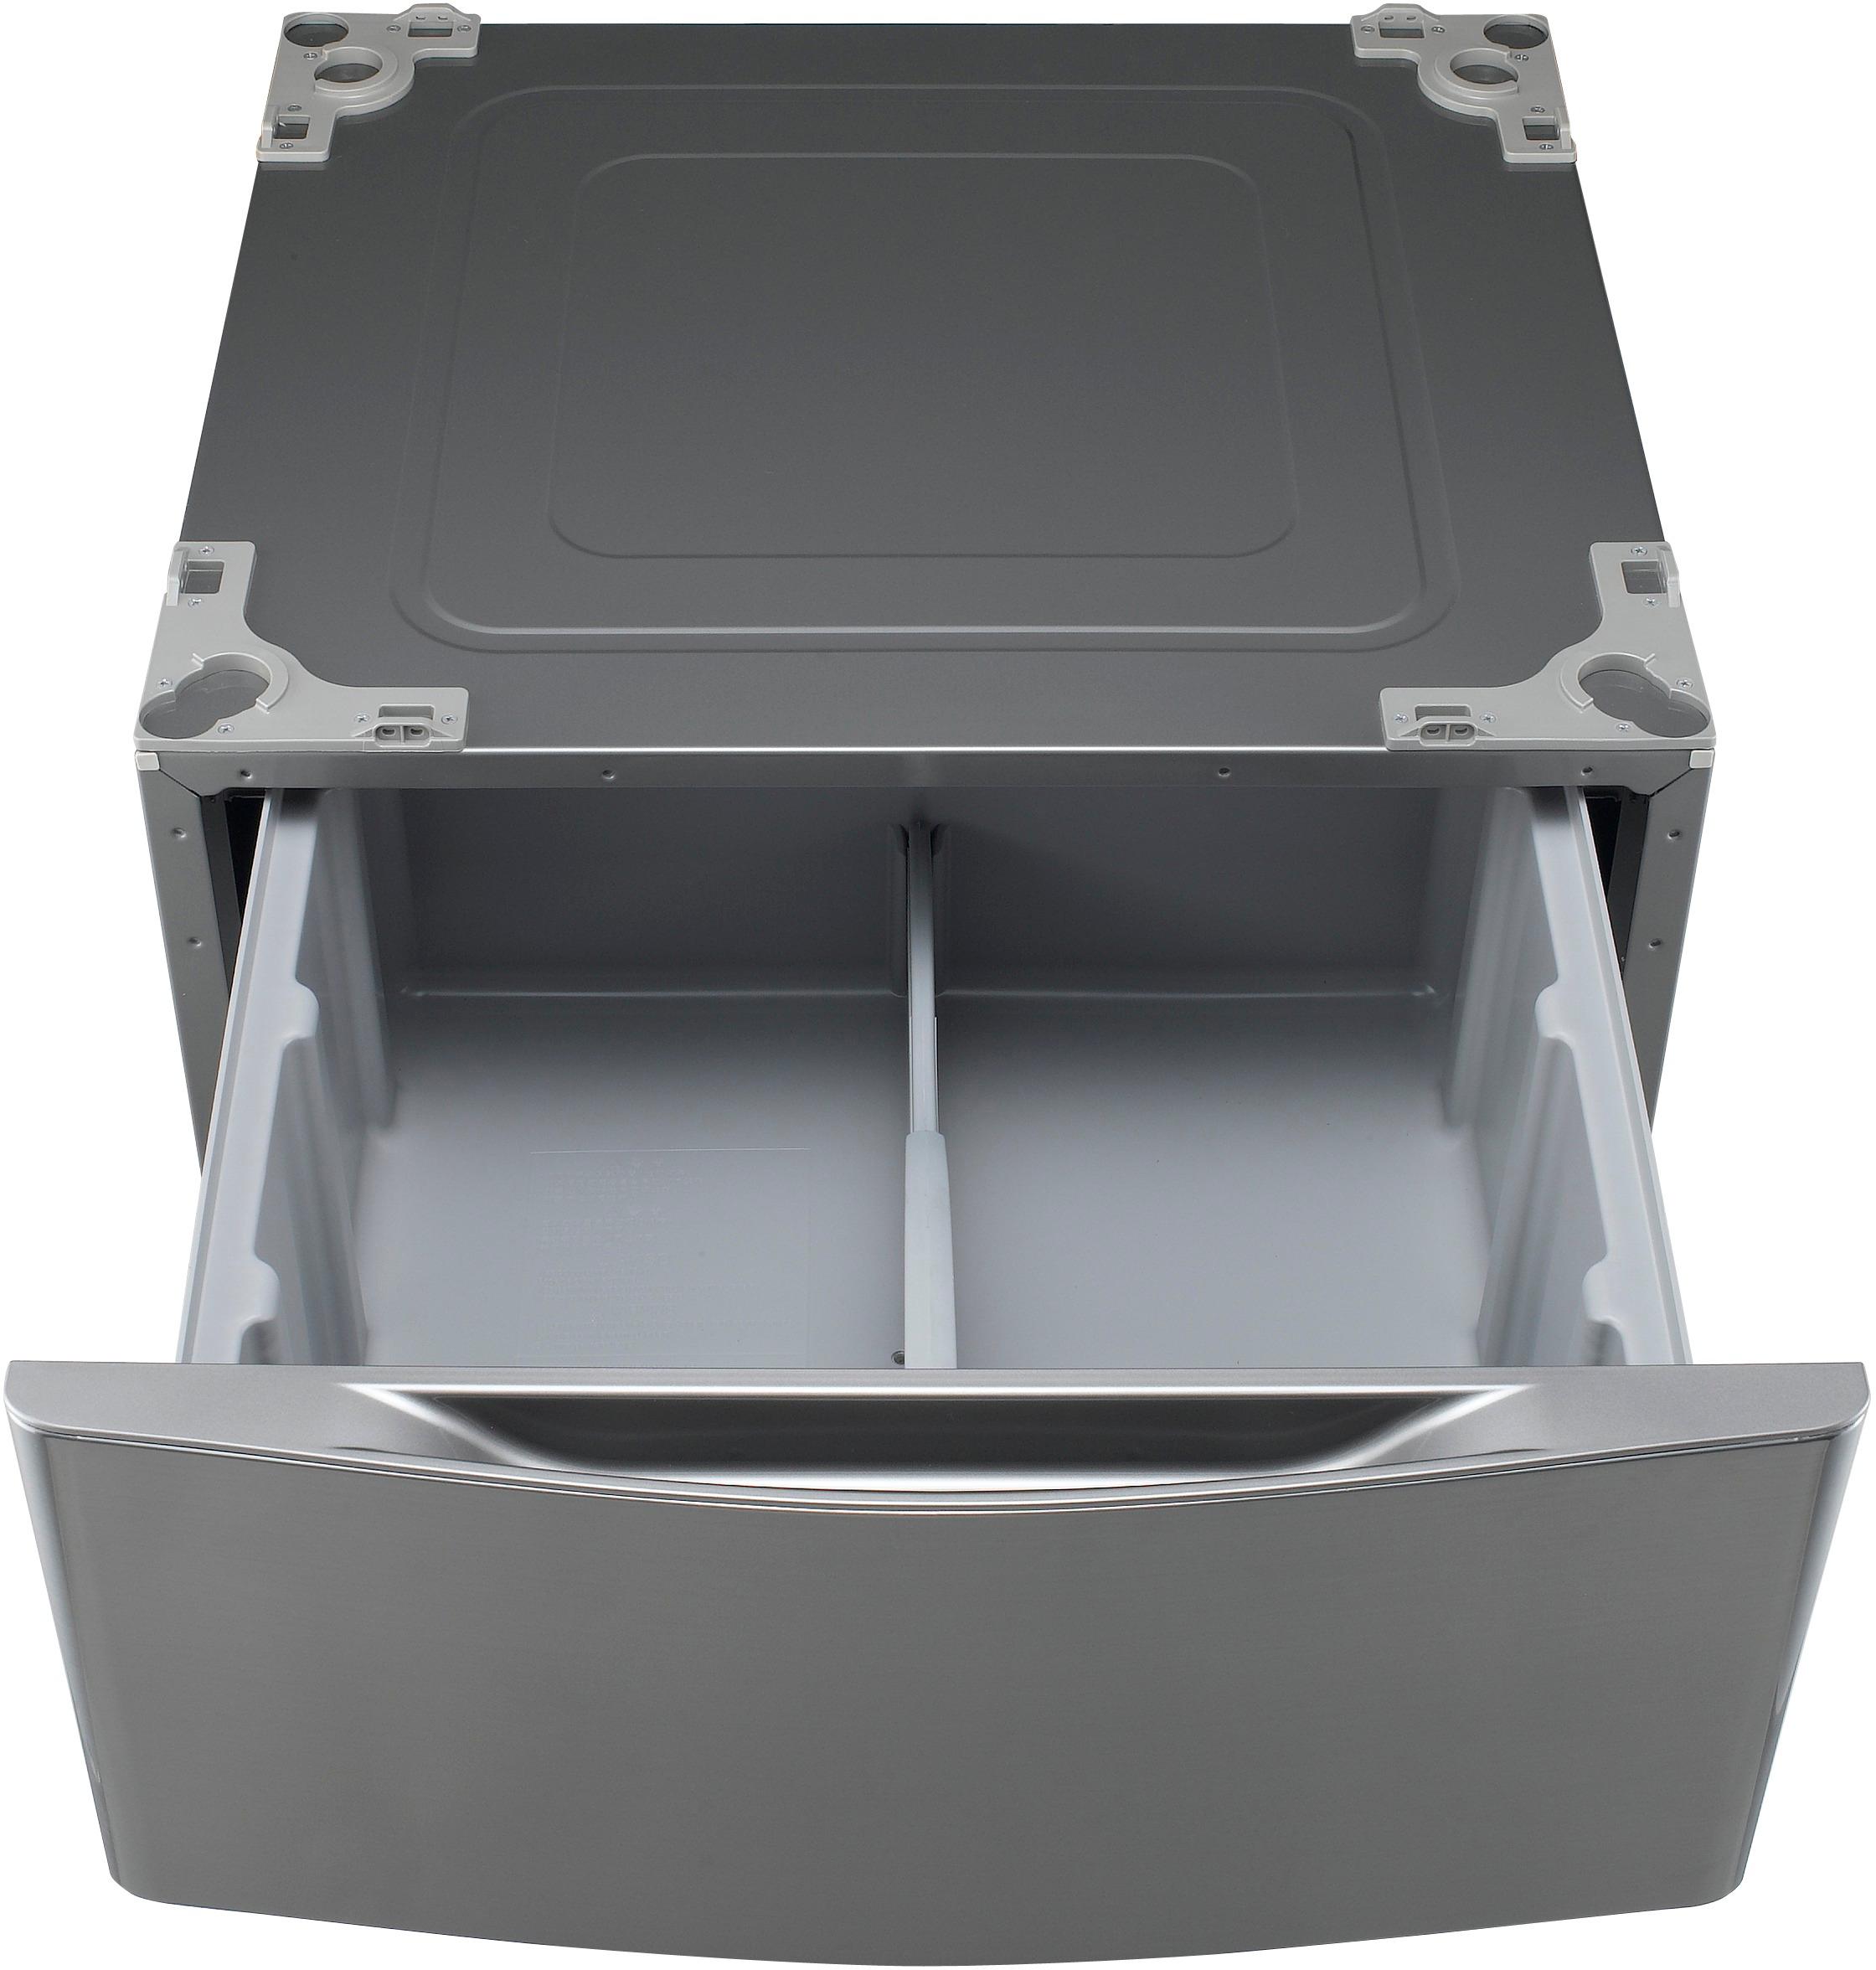 LG 27" Laundry Pedestal with Storage Drawer Graphite Steel WDP4V Best Buy